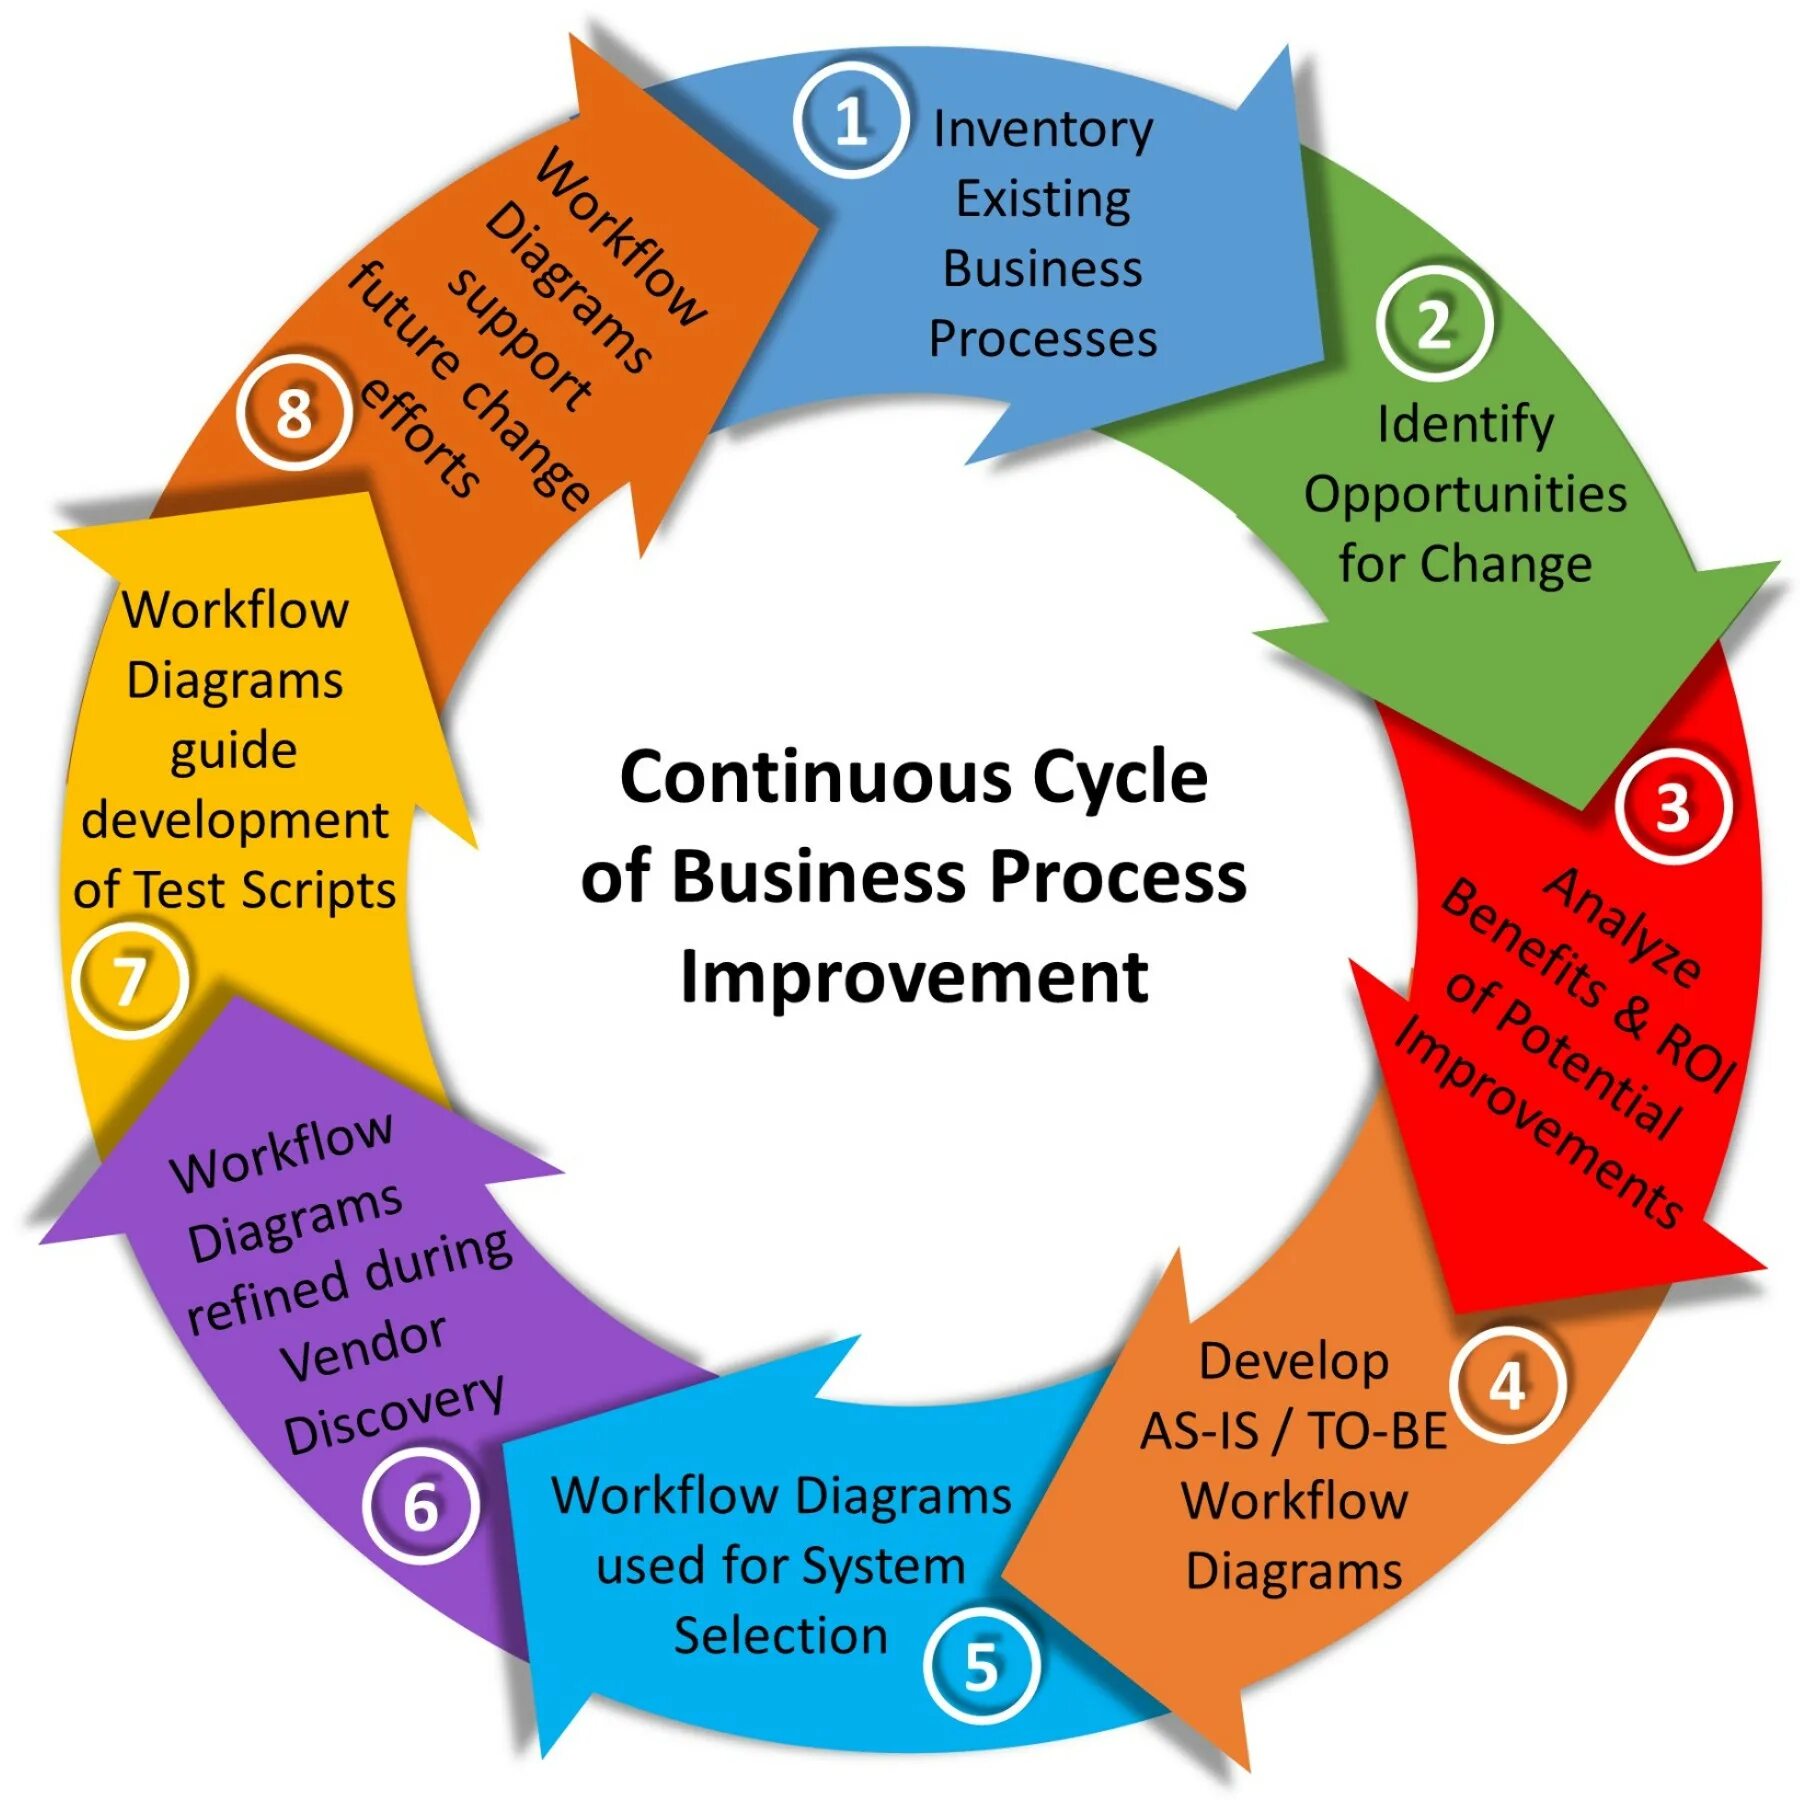 Day process. Управление бизнес-процессами. Оптимизация процессов. Концепция Business process Improvement. Оптимизация бизнес-процессов фото.